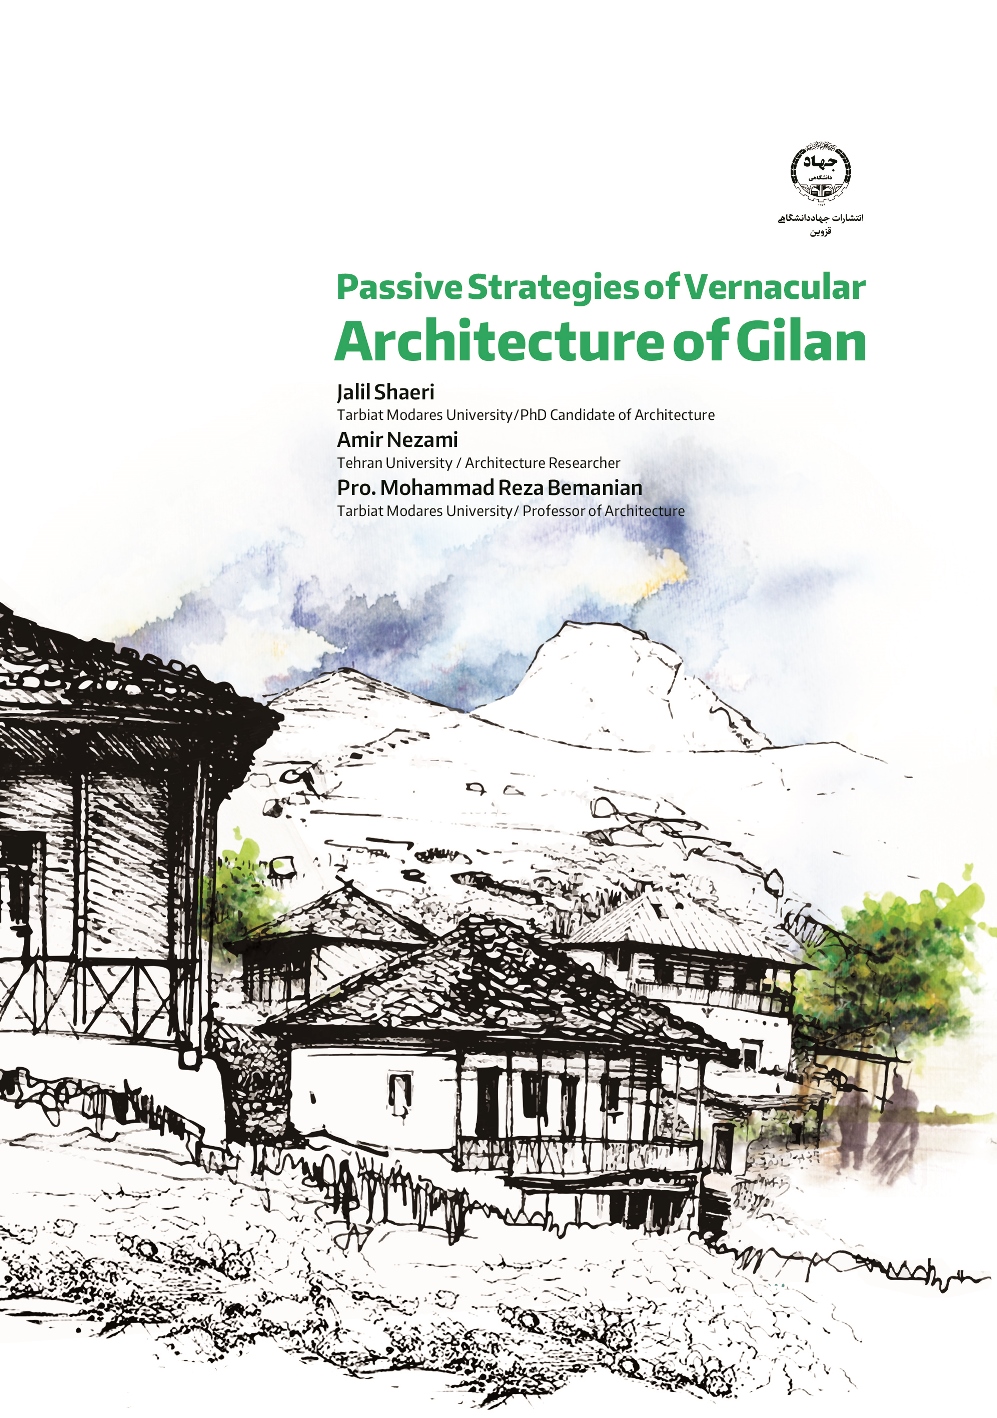 Passive Strategies of Vernacular Architecture of Gilan, Iran